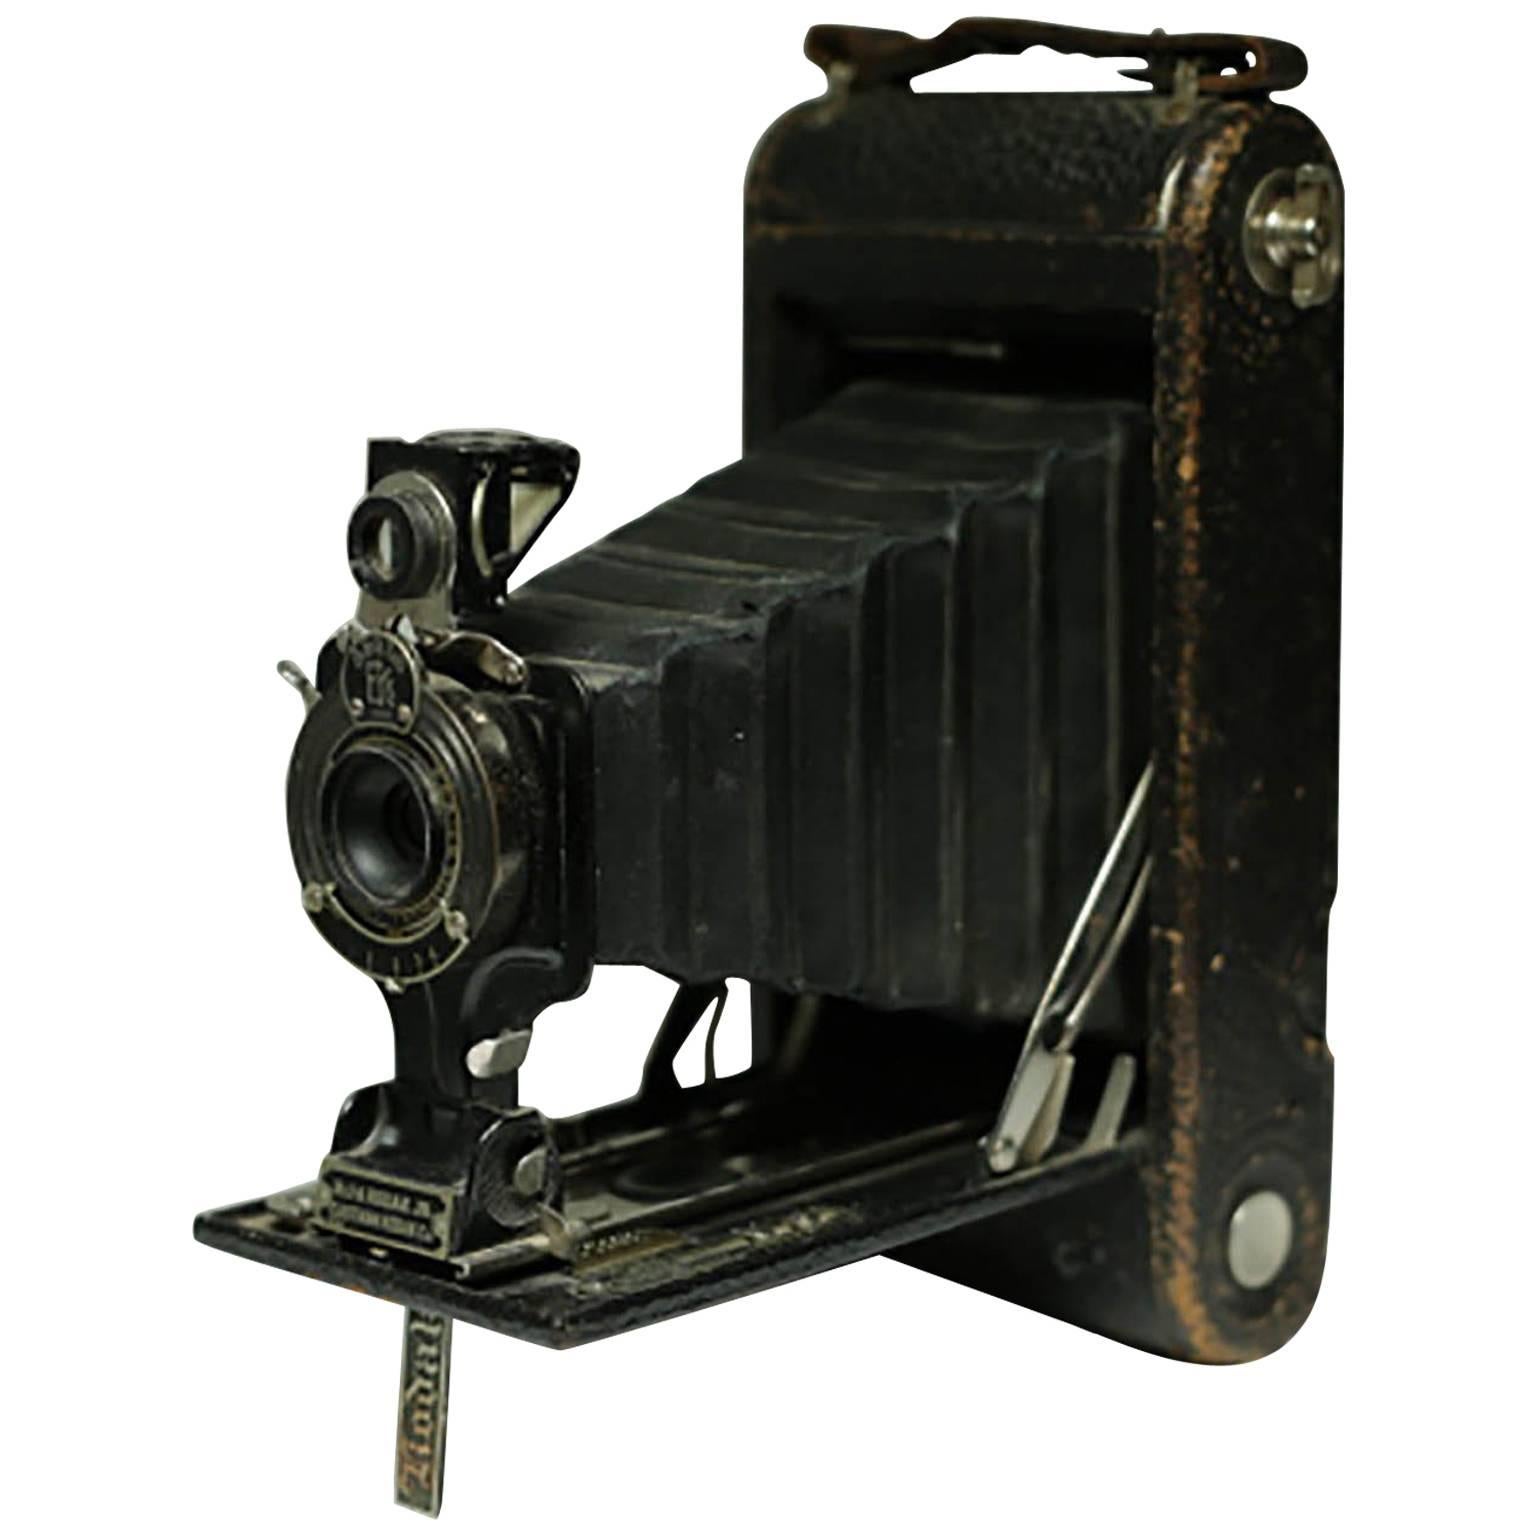 Antique Eastman Kodak Fold Out Land Camera, circa 1920s